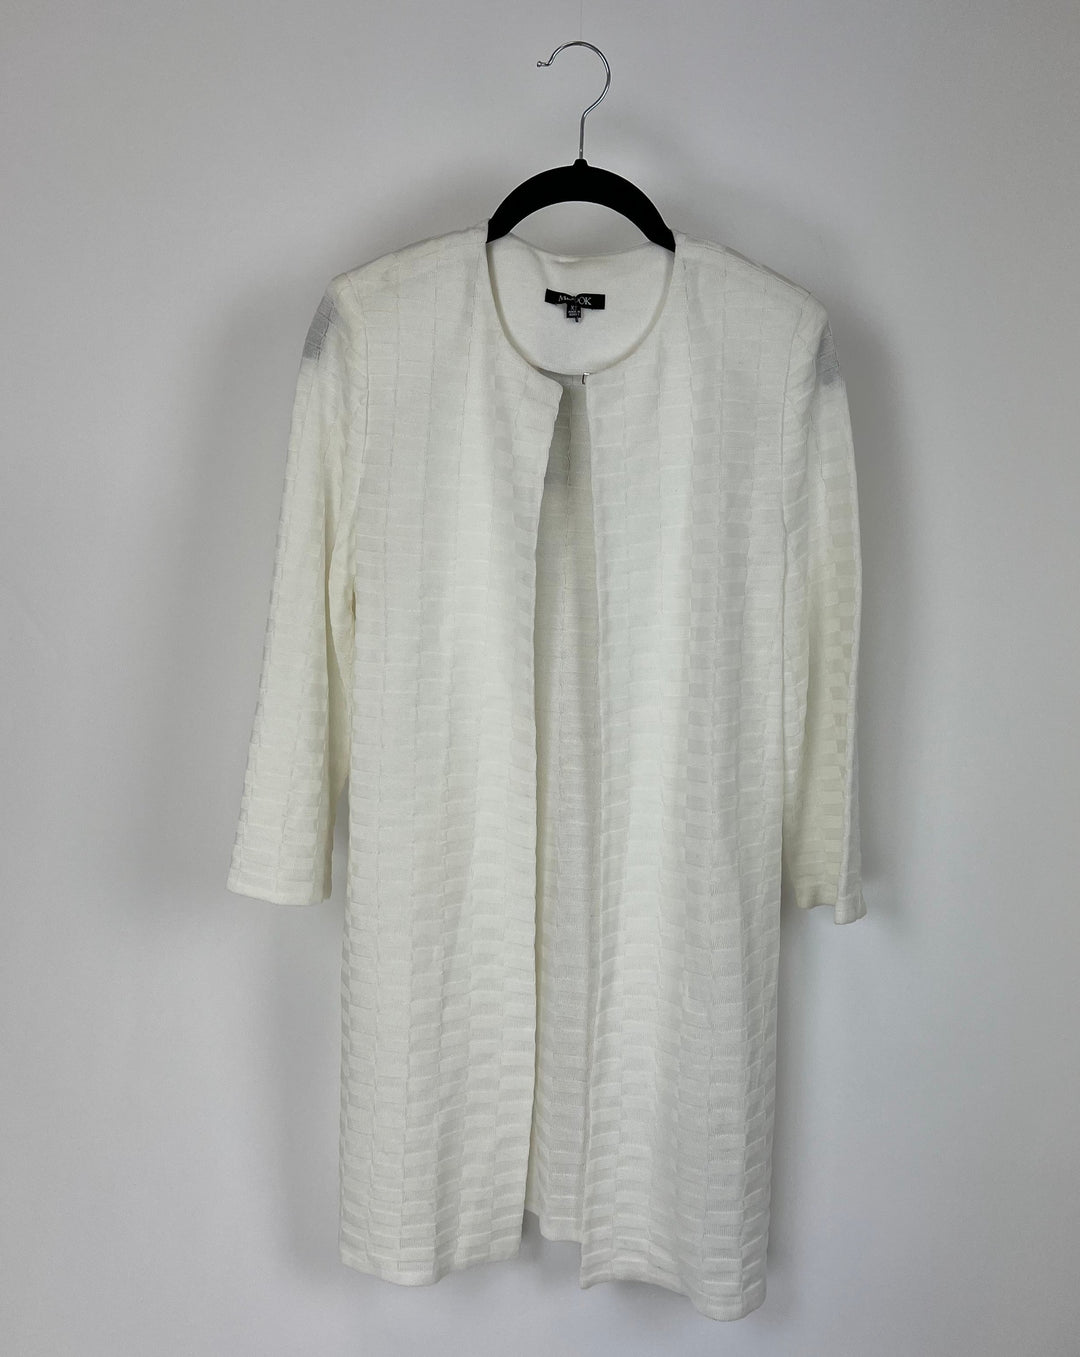 White Textured Cardigan - Size 2-4